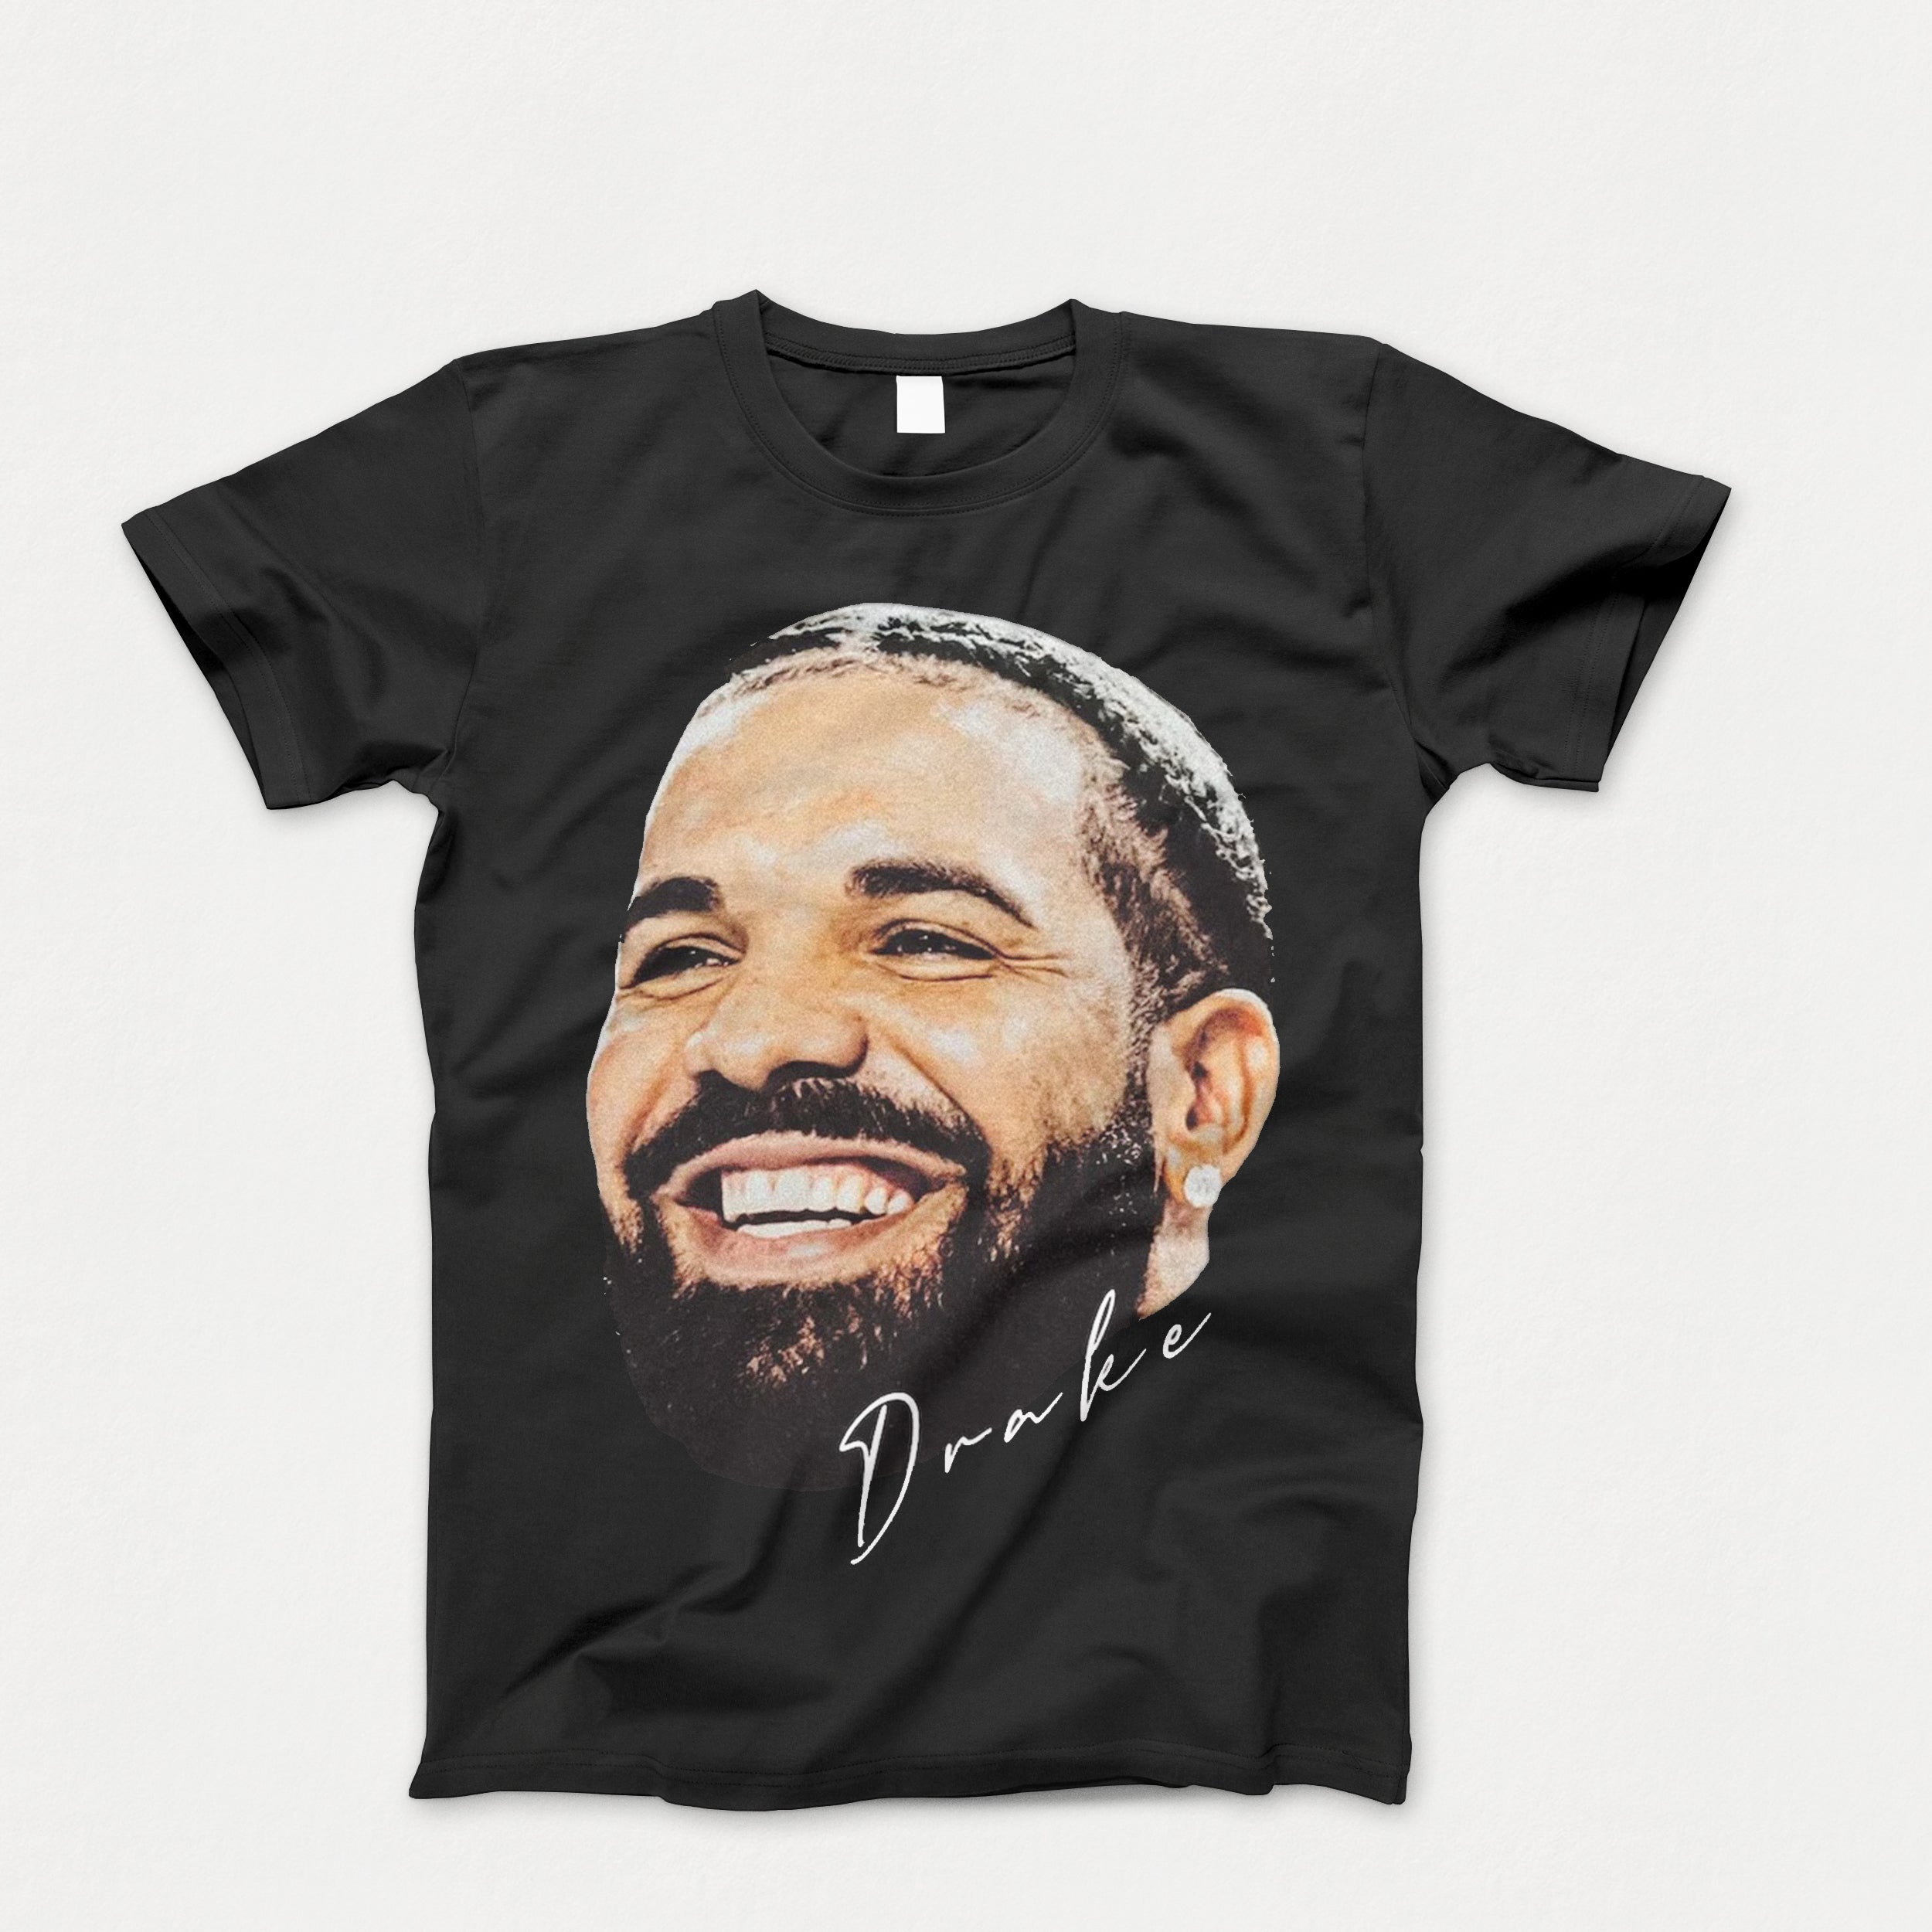 Unisex Adult Drake Tee Shirt